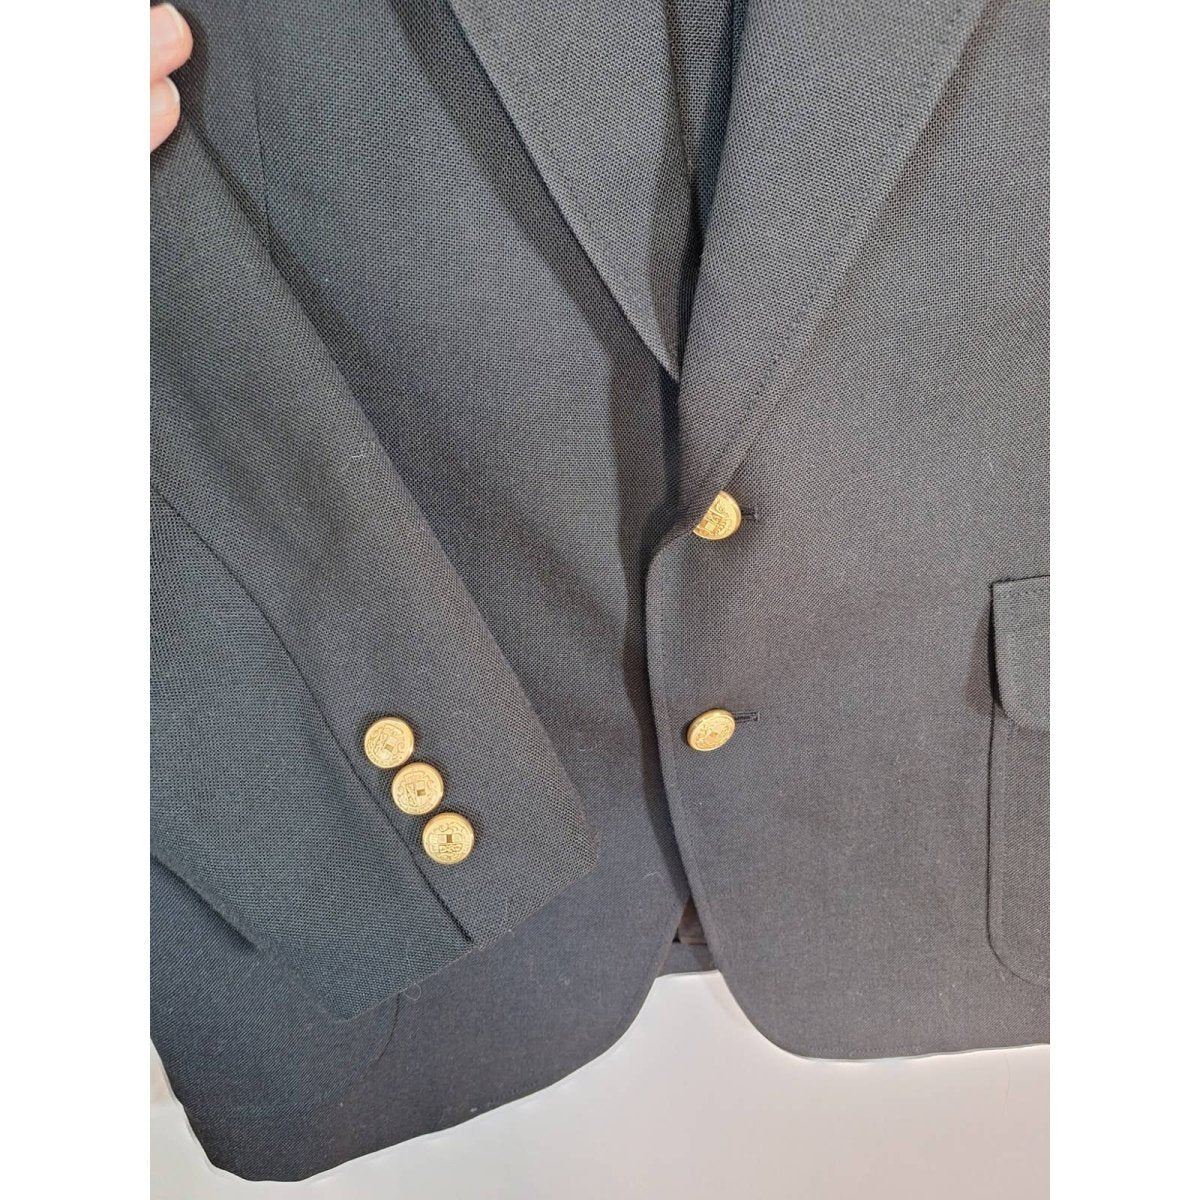 Vintage 70s Black Gold Button Sport Jacket Blazer Men's Size 40-42 Short - themallvintage The Mall Vintage